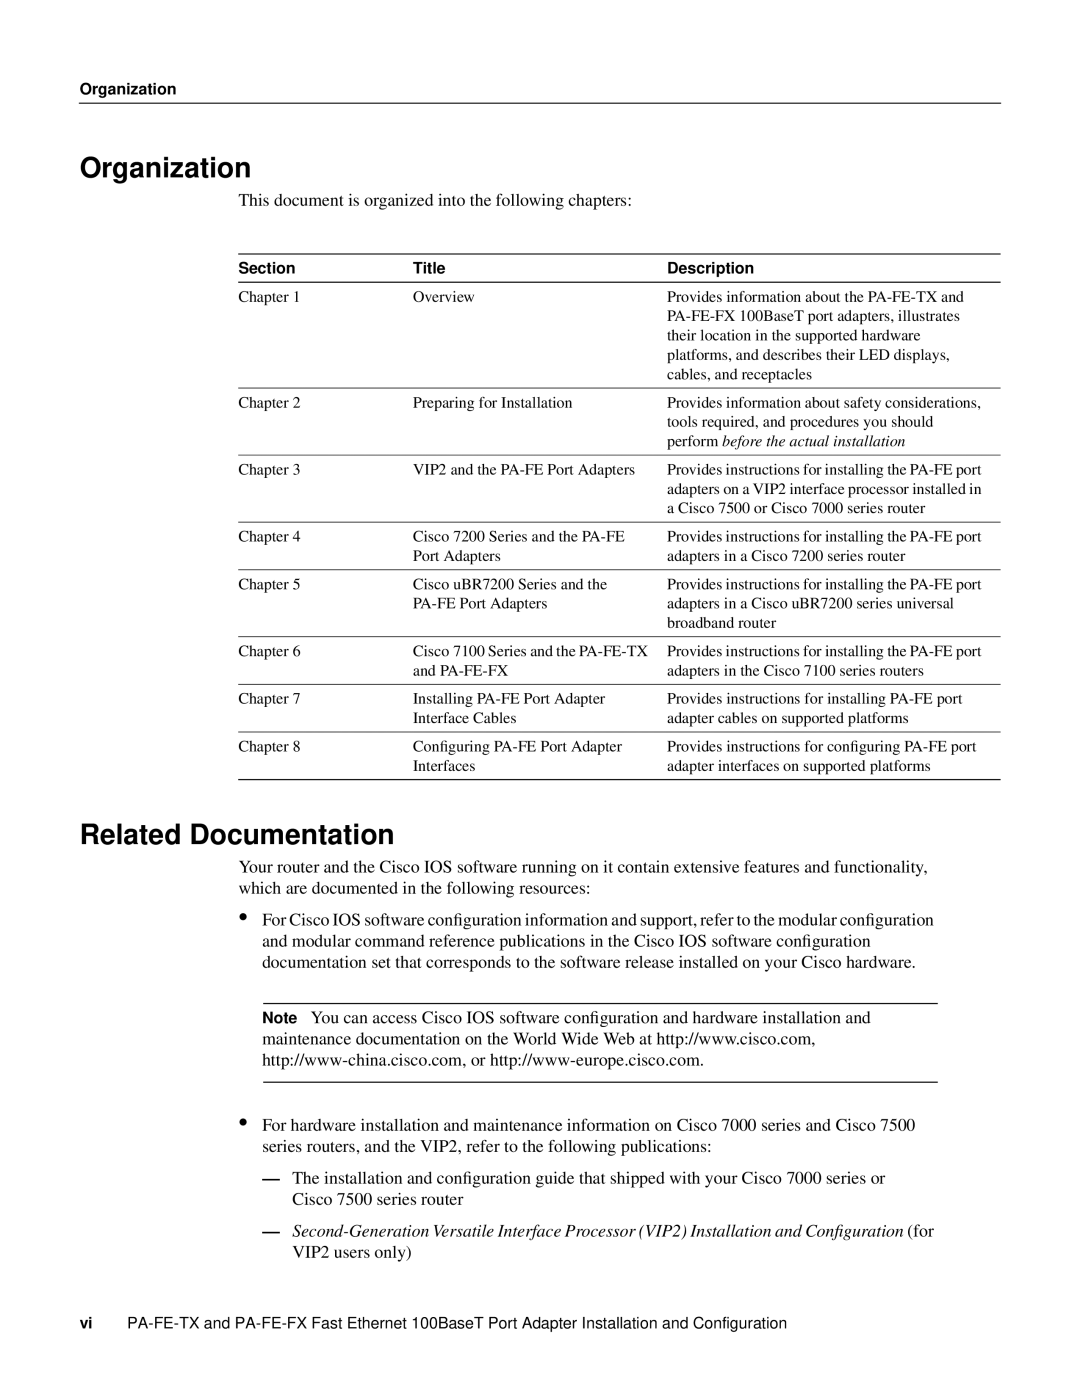 Cisco Systems PA-FE-TX, PA-FE-FX manual Organization, Related Documentation 